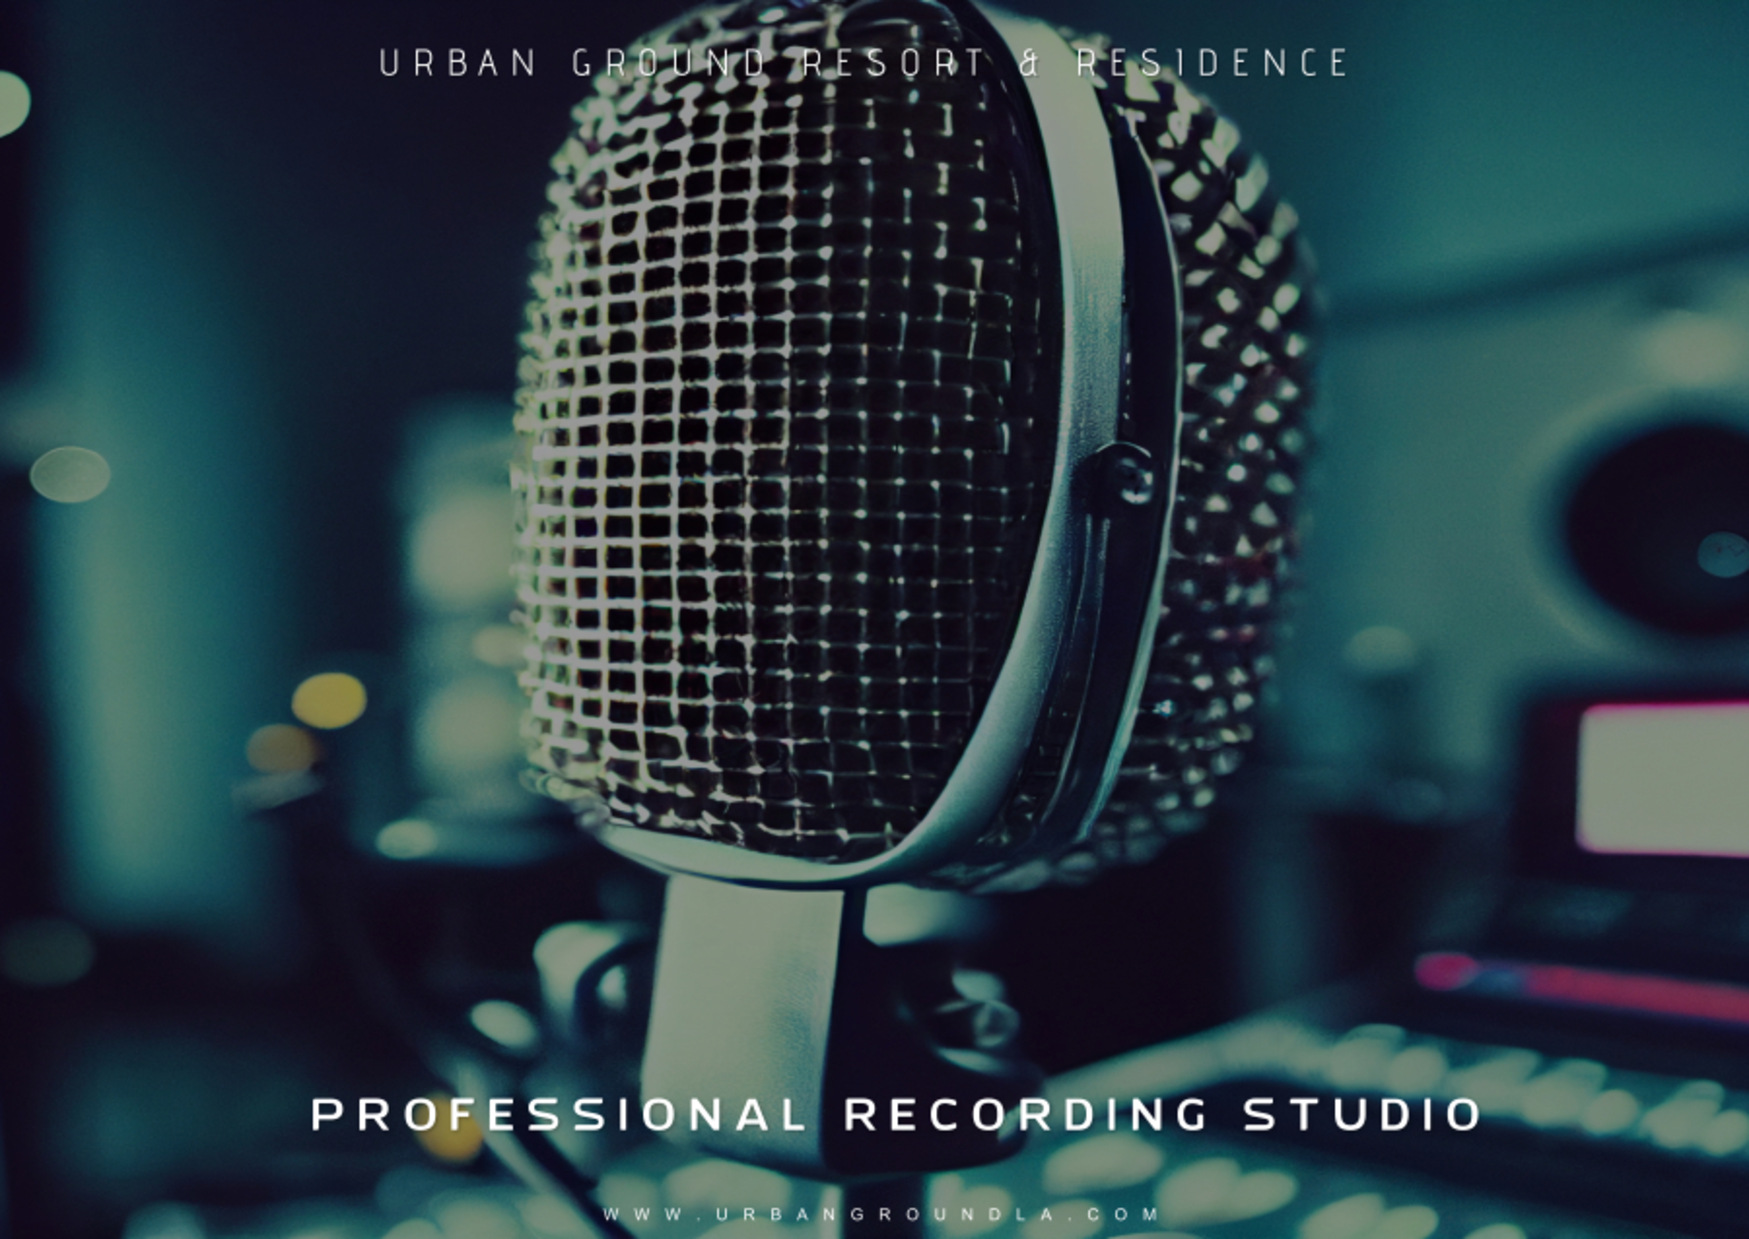 The Recording Studio Urban Ground Resort & Residence